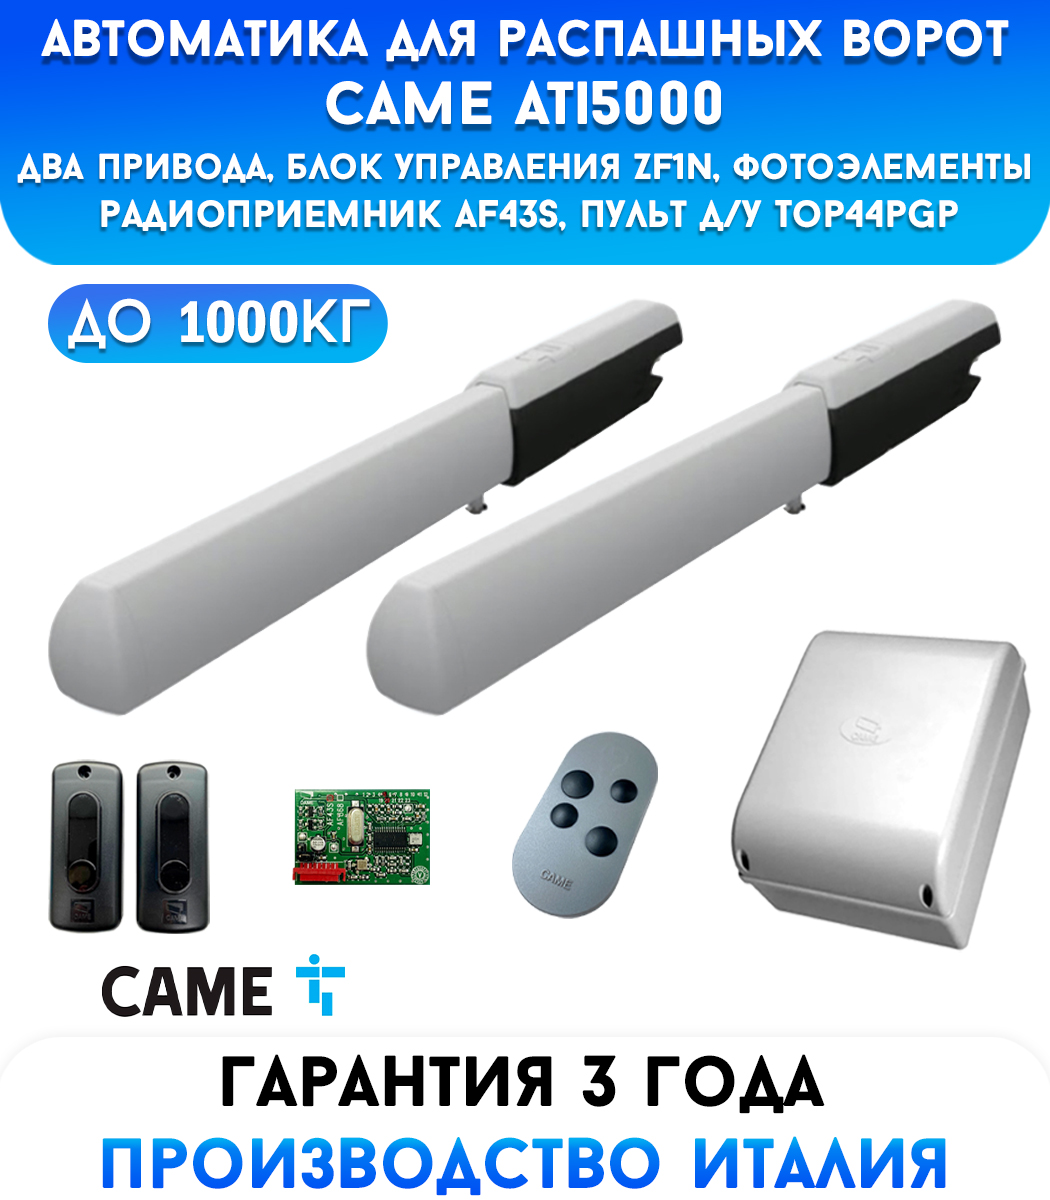 Came A5000 COMBO CLASSICO автоматика для распашных ворот (001U1520RU)